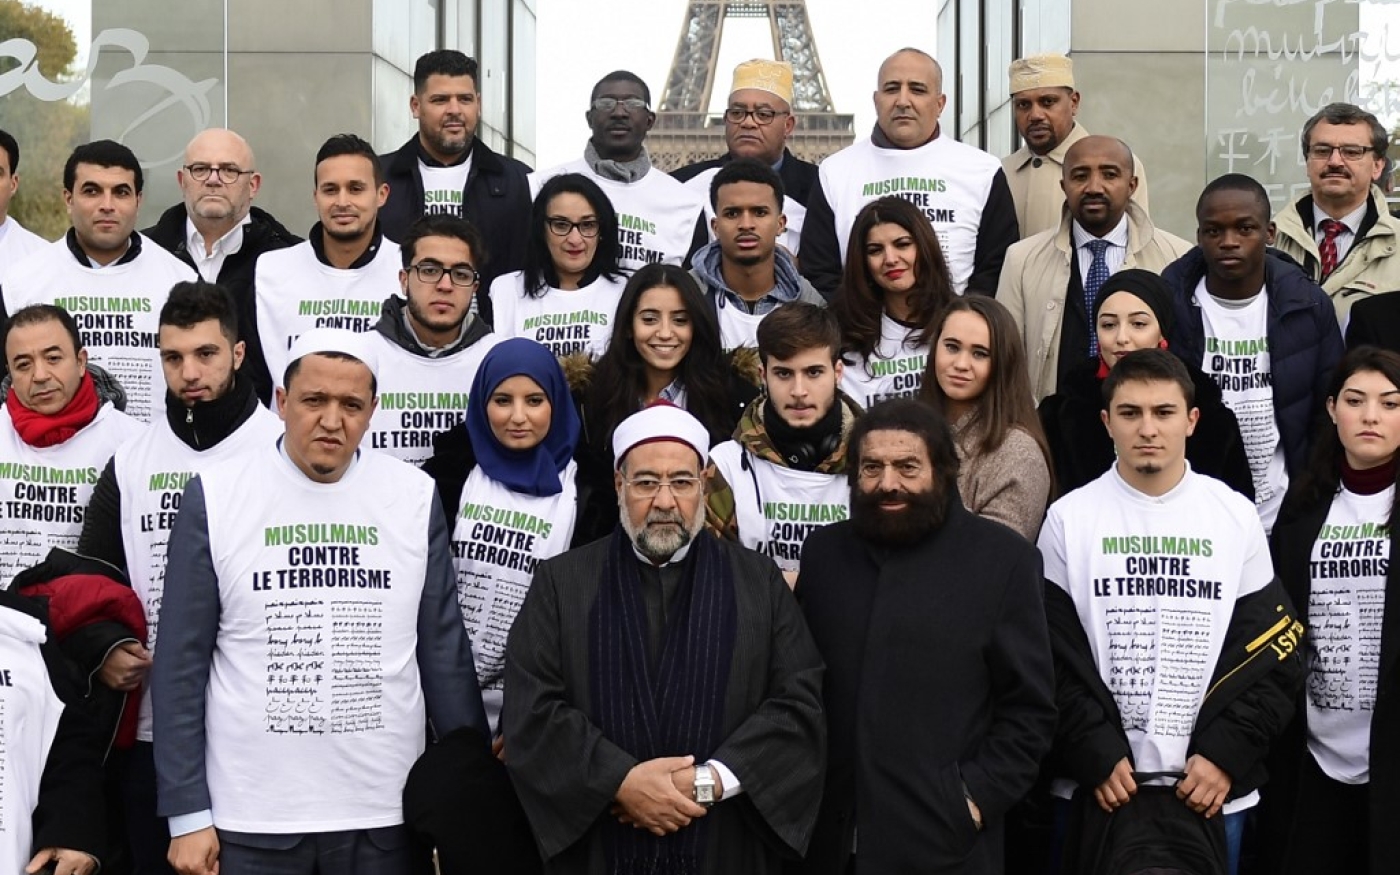 Muslims Against Terrorism campaign